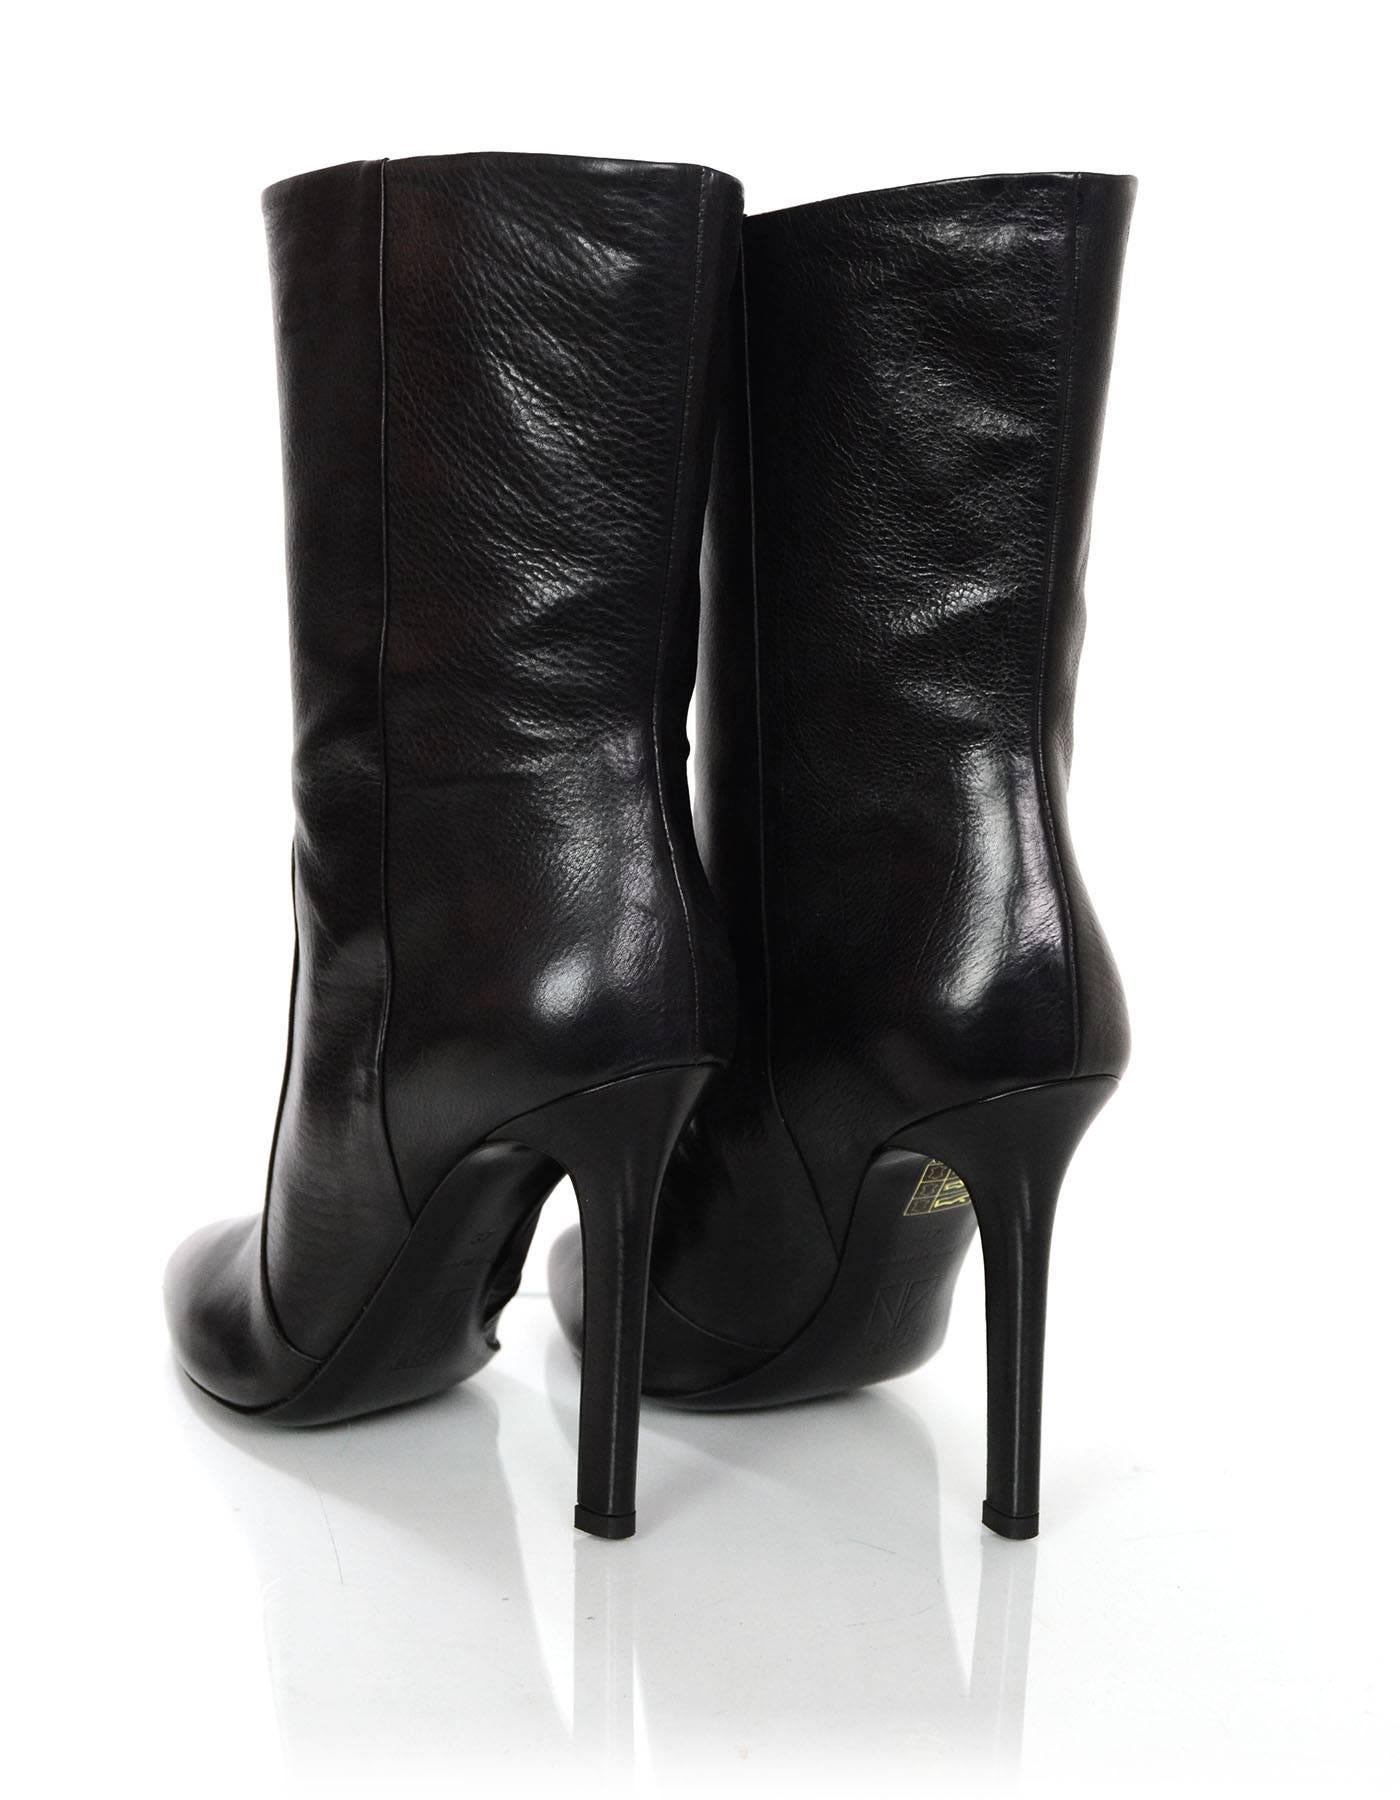 Women's Tamara Mellon NEW Black Leather Rebel Boots sz 37 rt. $895